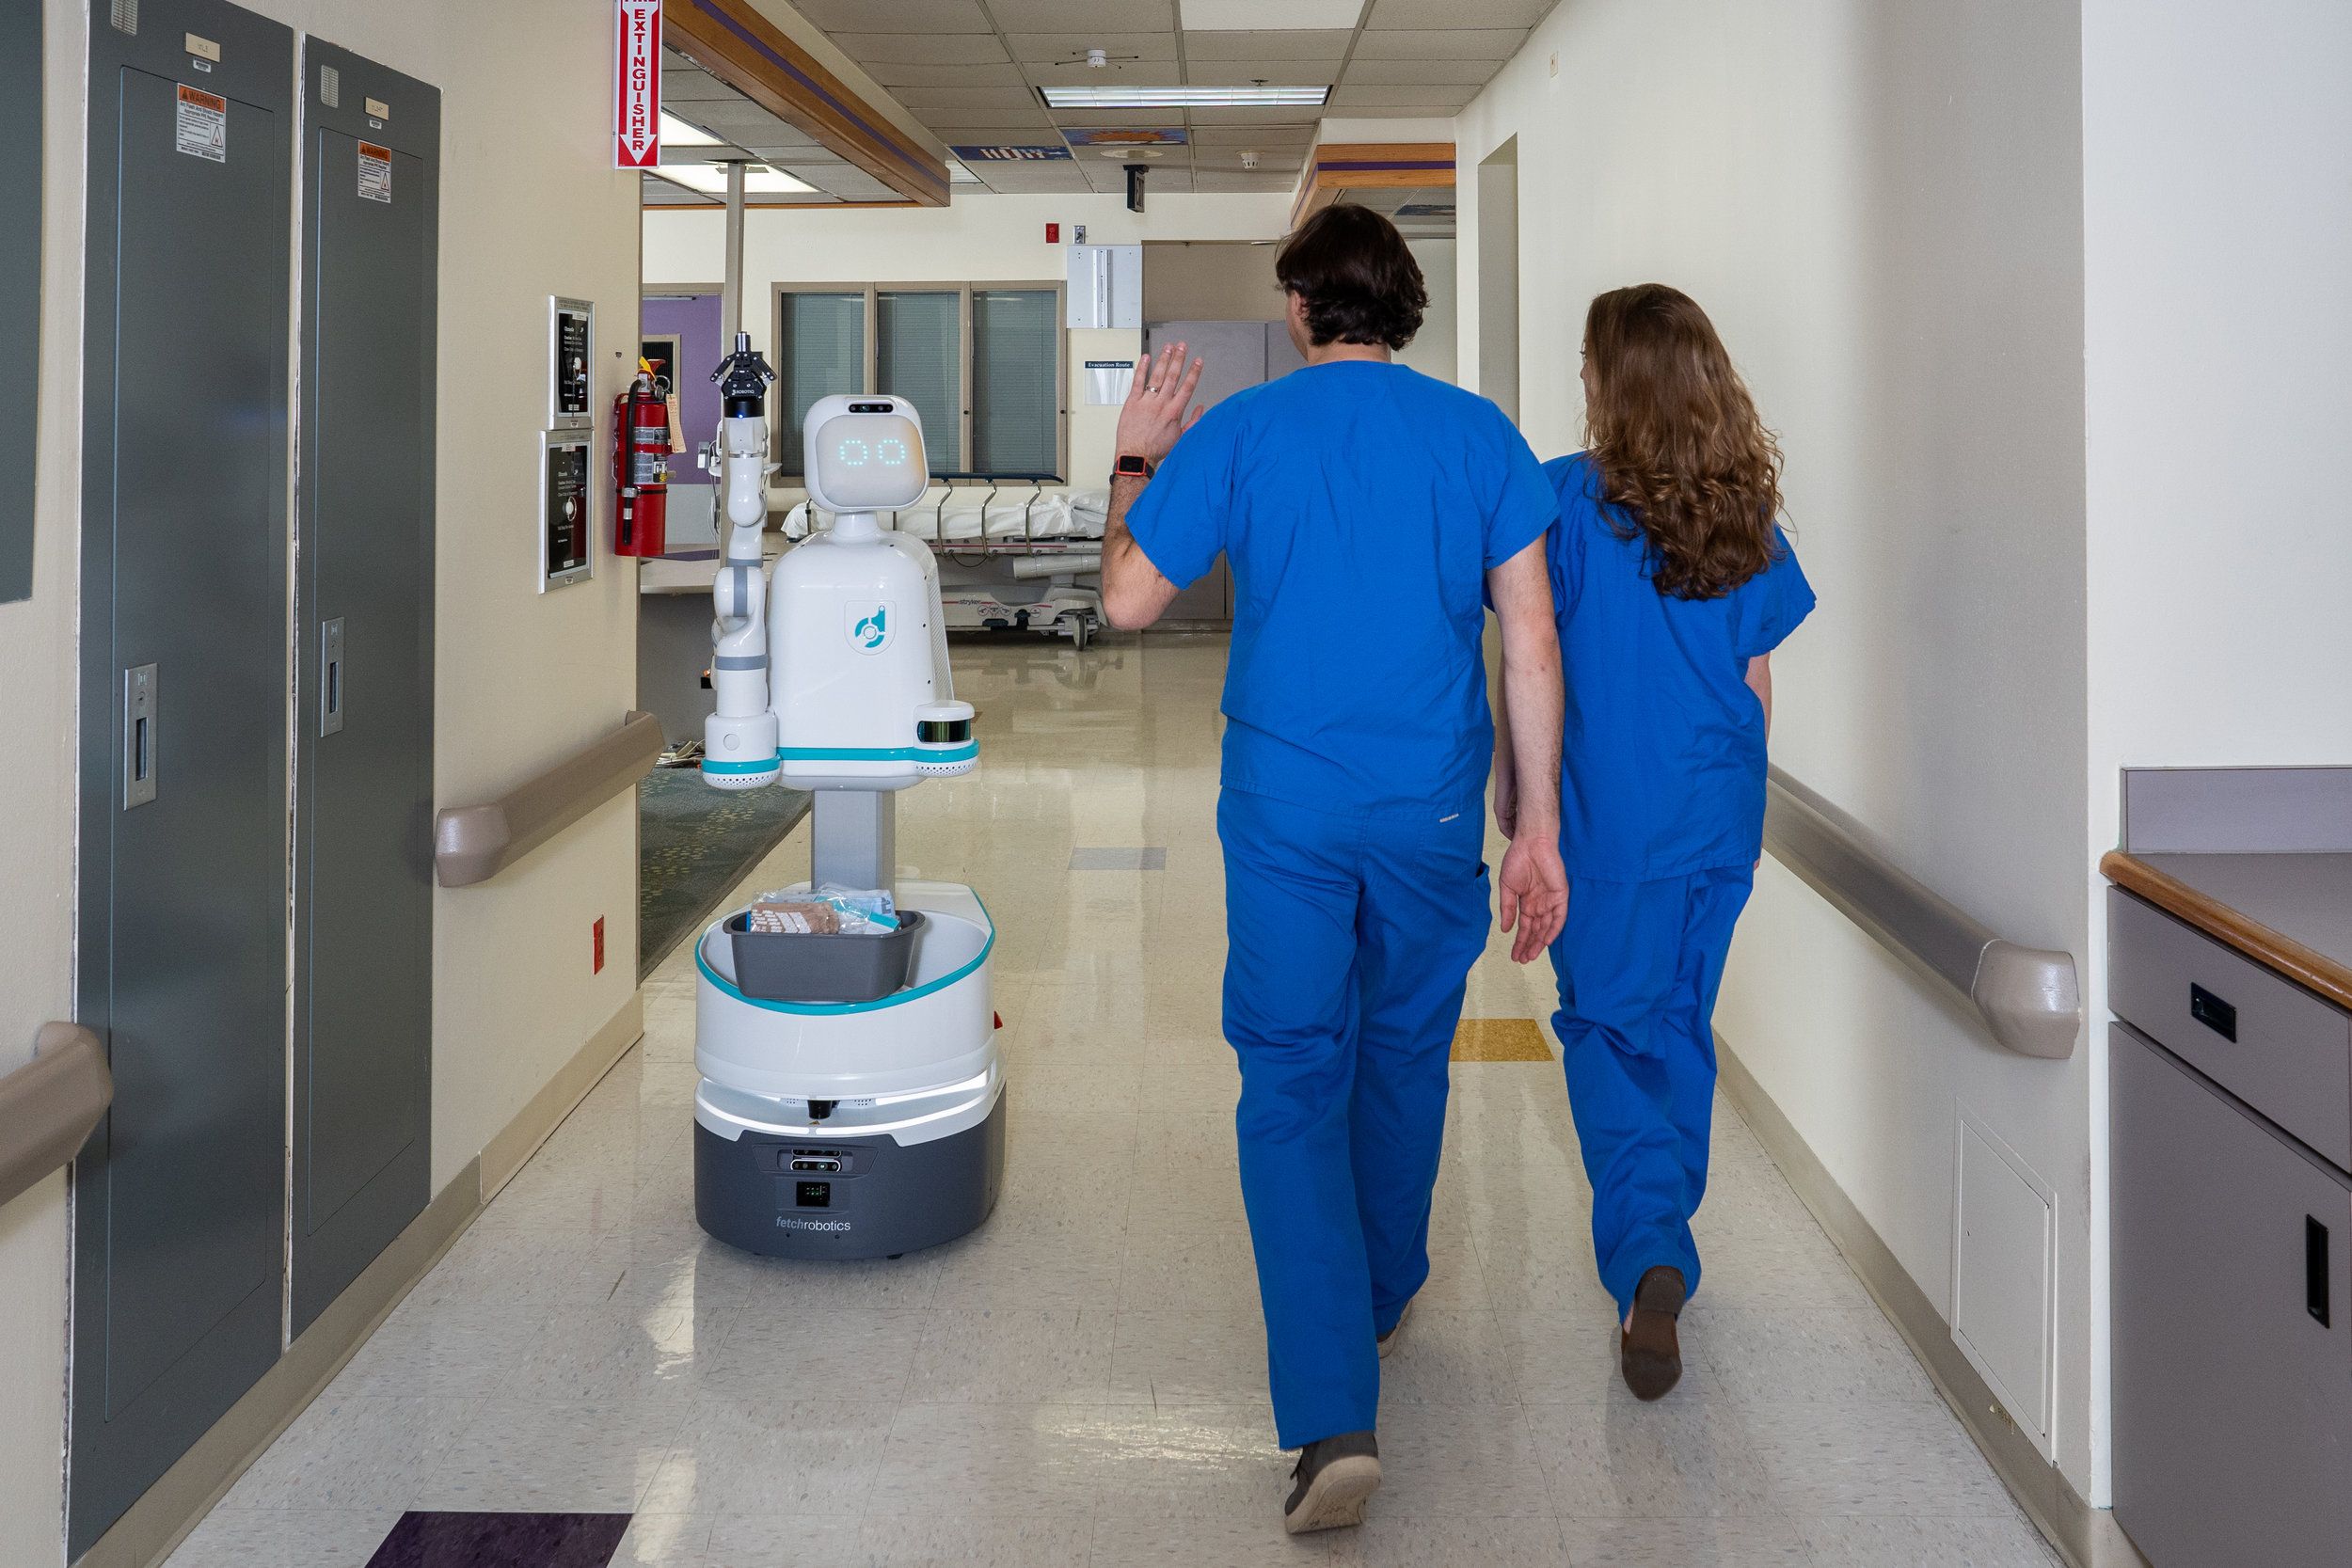 Moxi robot at Texas hospital